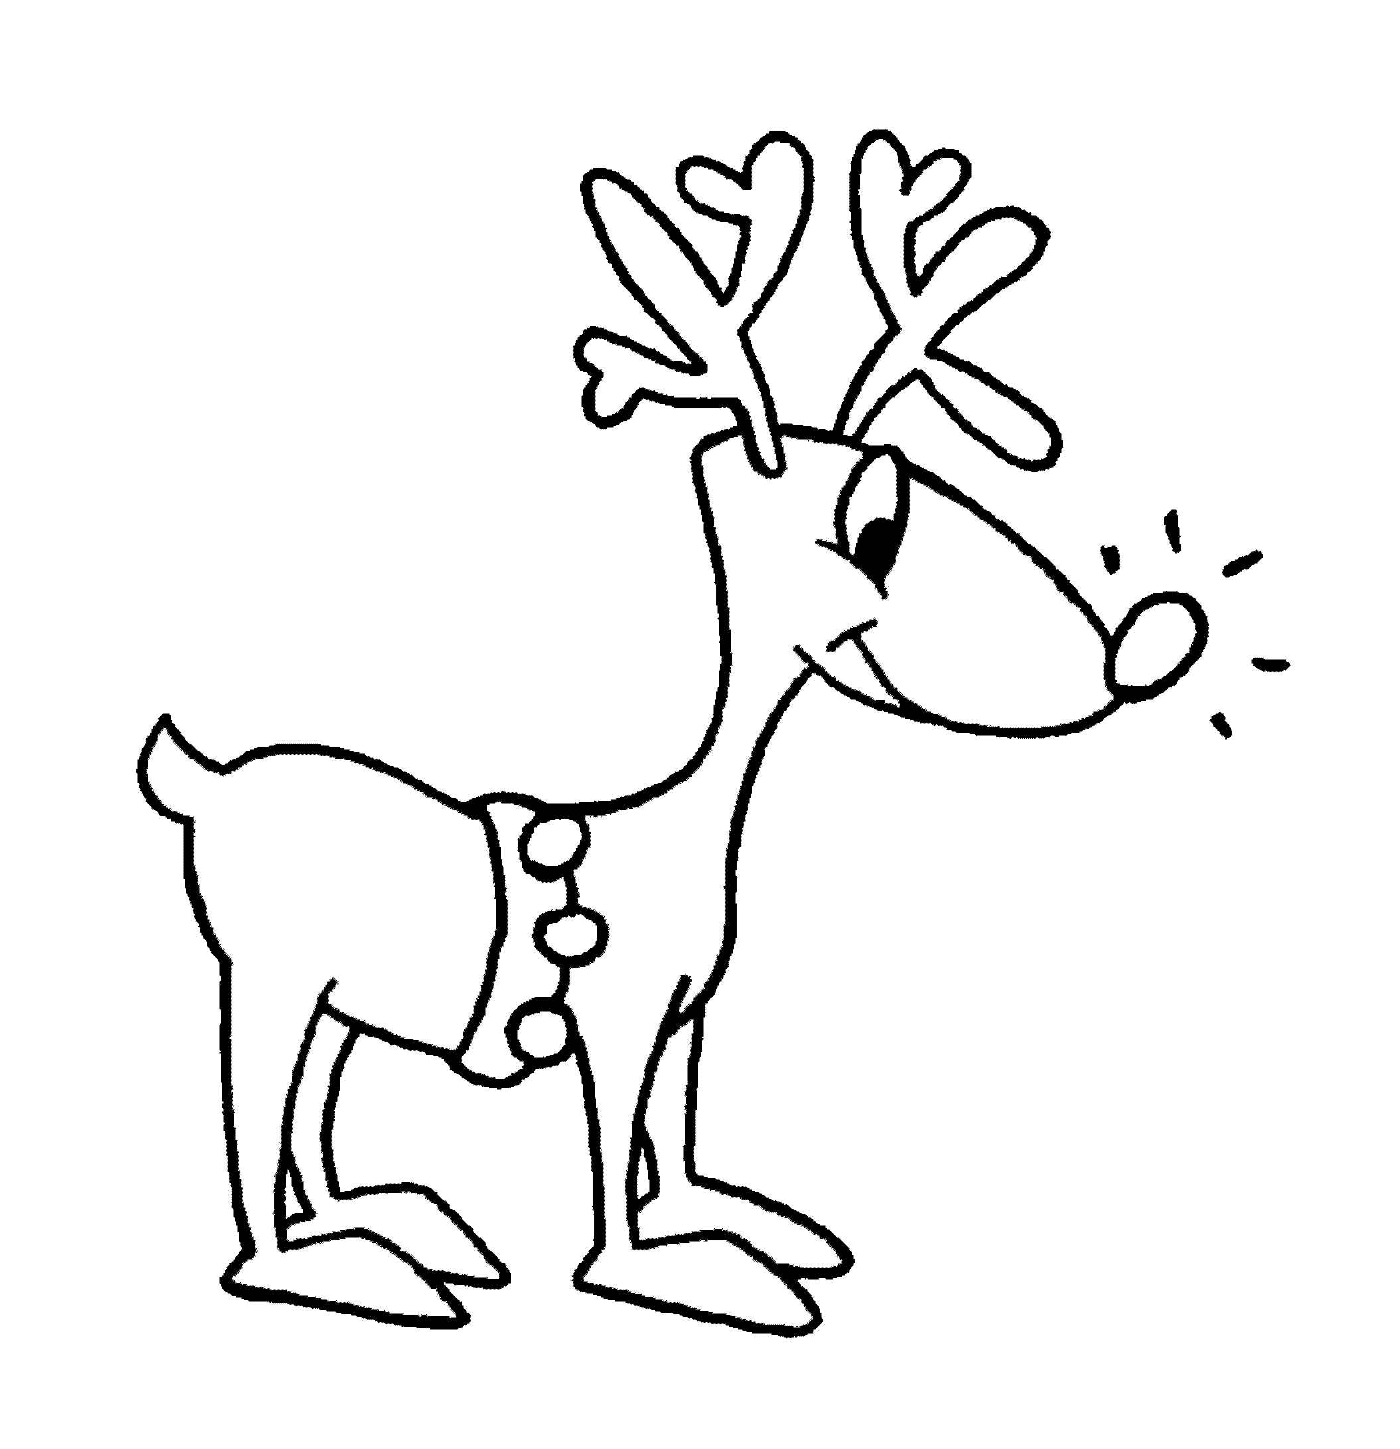  Simple Christmas with reindeer 